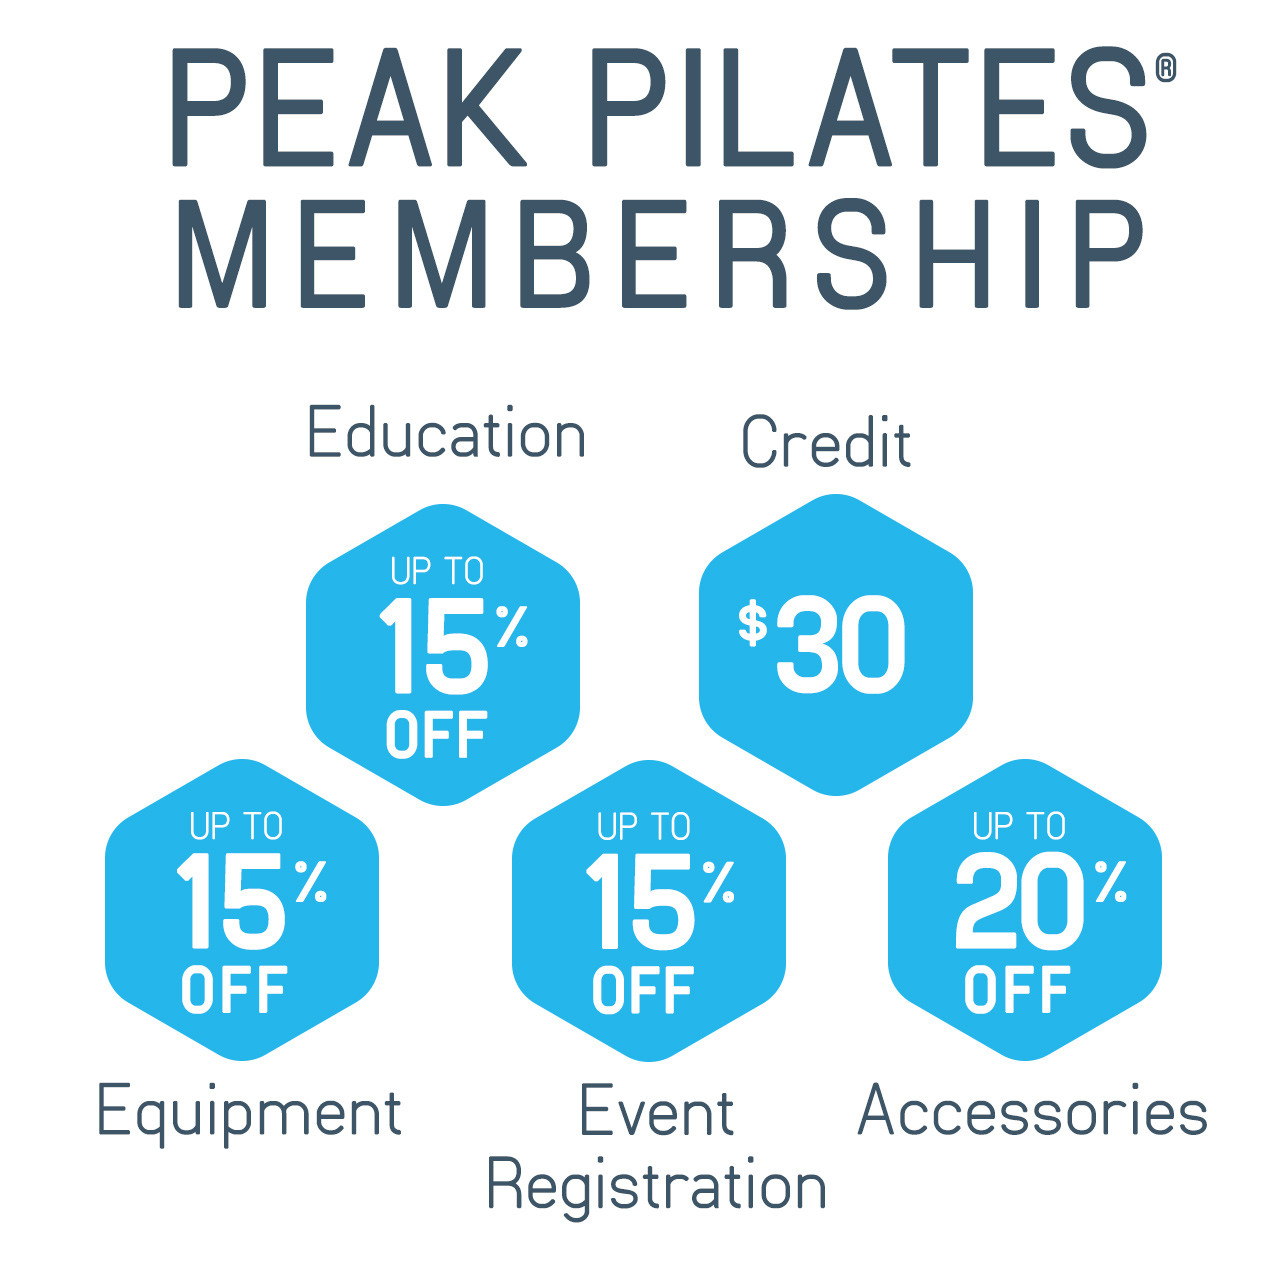 Peak Pilates® Education Certification